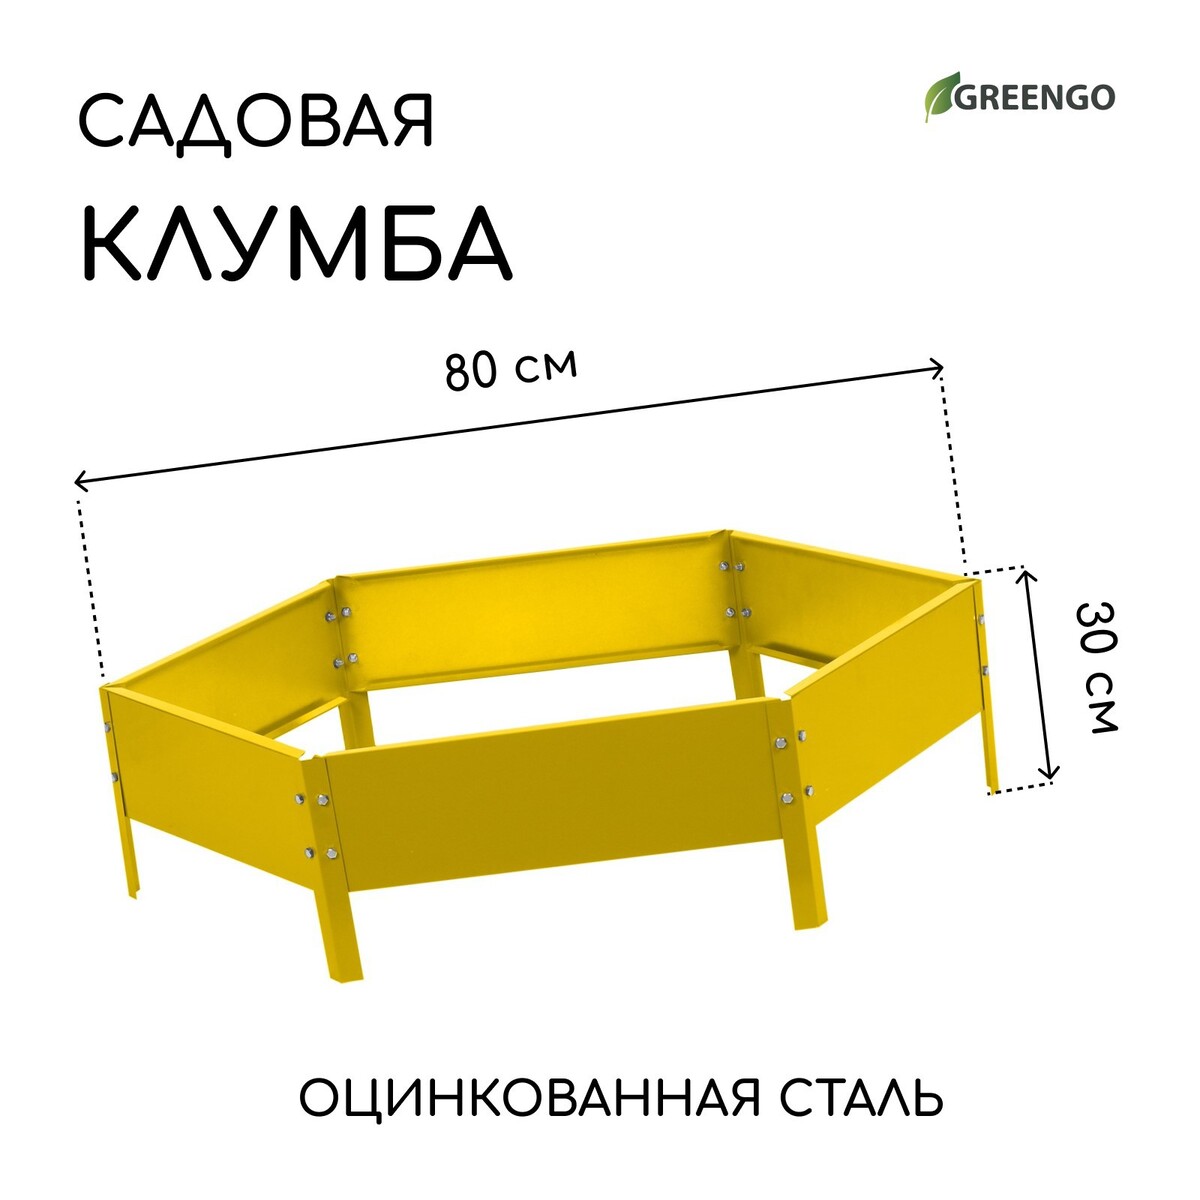 Клумба оцинкованная, d = 80 см, h = 15 см, желтая, greengo din рейка l 225 оцинкованная желтый